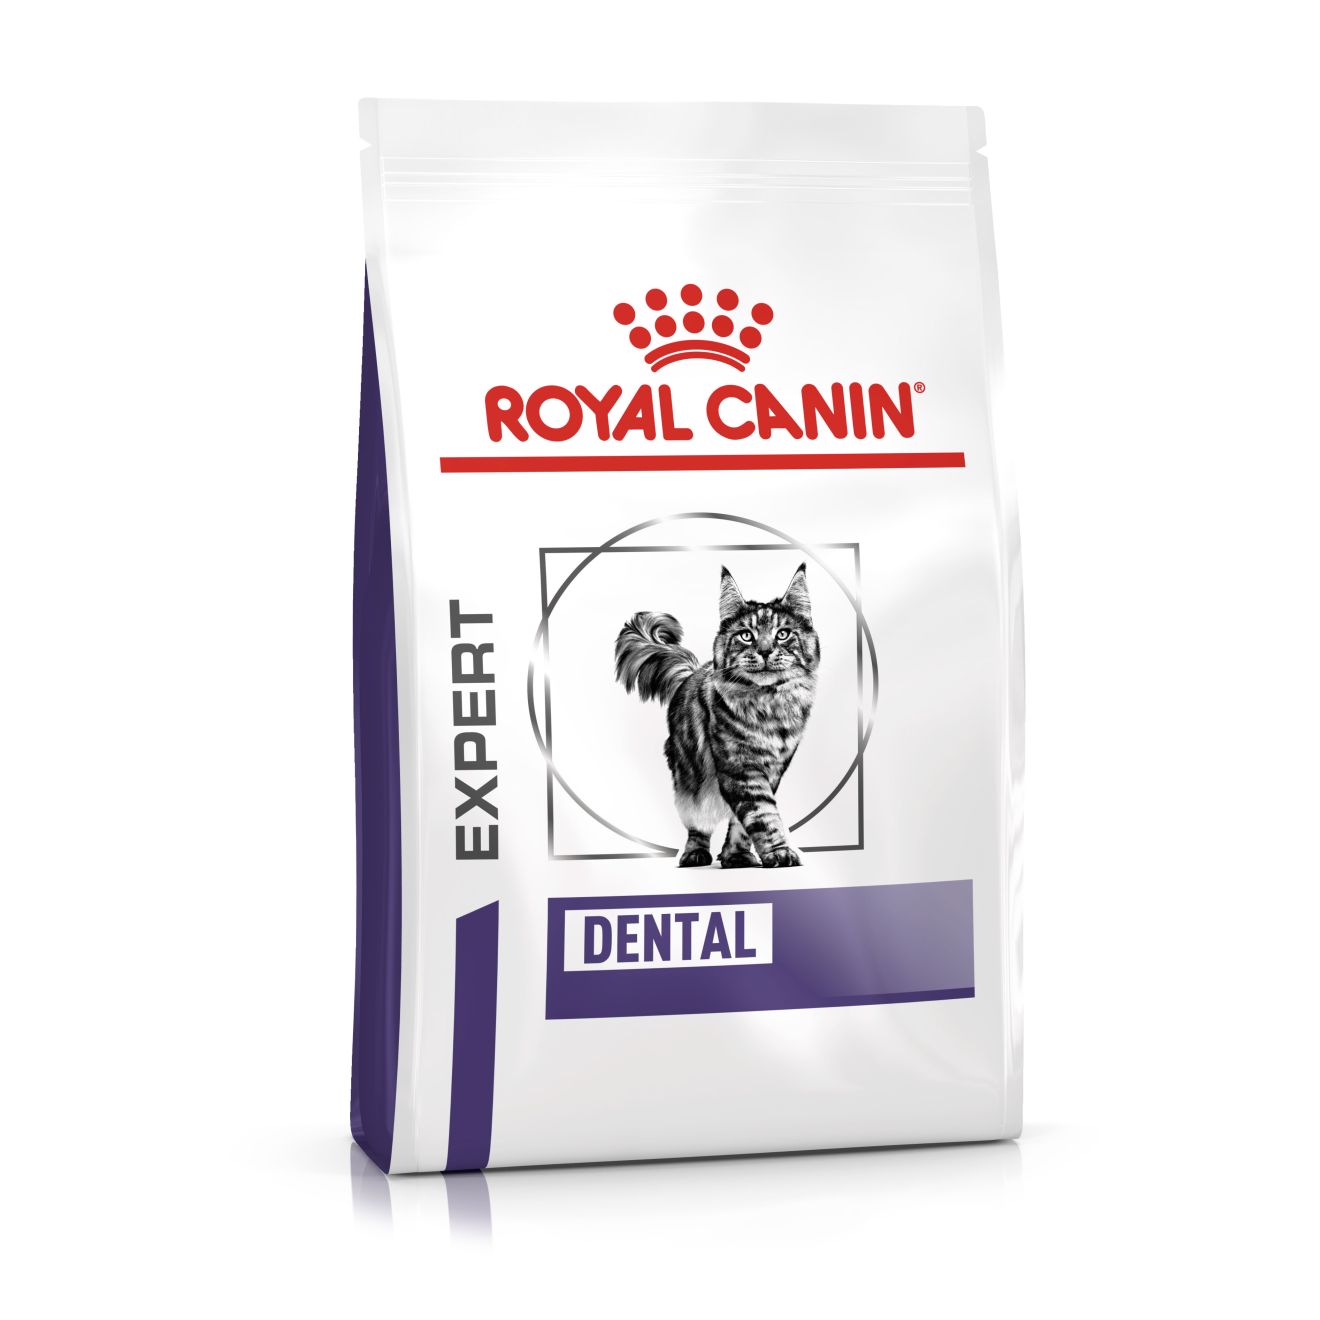 ROYAL CANIN Expert DENTAL Trockenfutter für Katzen 1,5 kg 